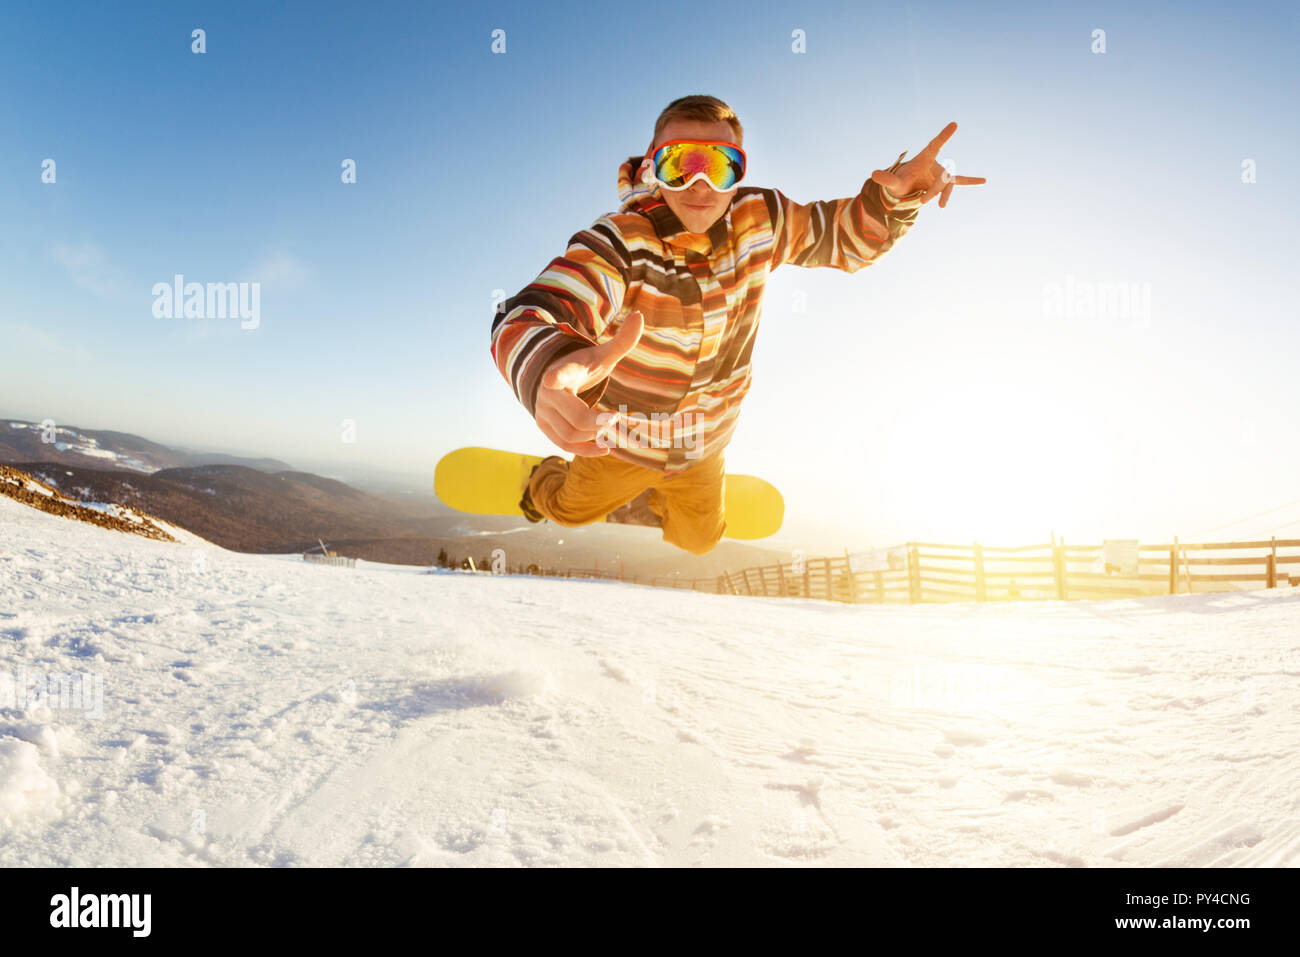 Snowboarder is having fun jumps and drop at ski slope at playful pose Stock Photo